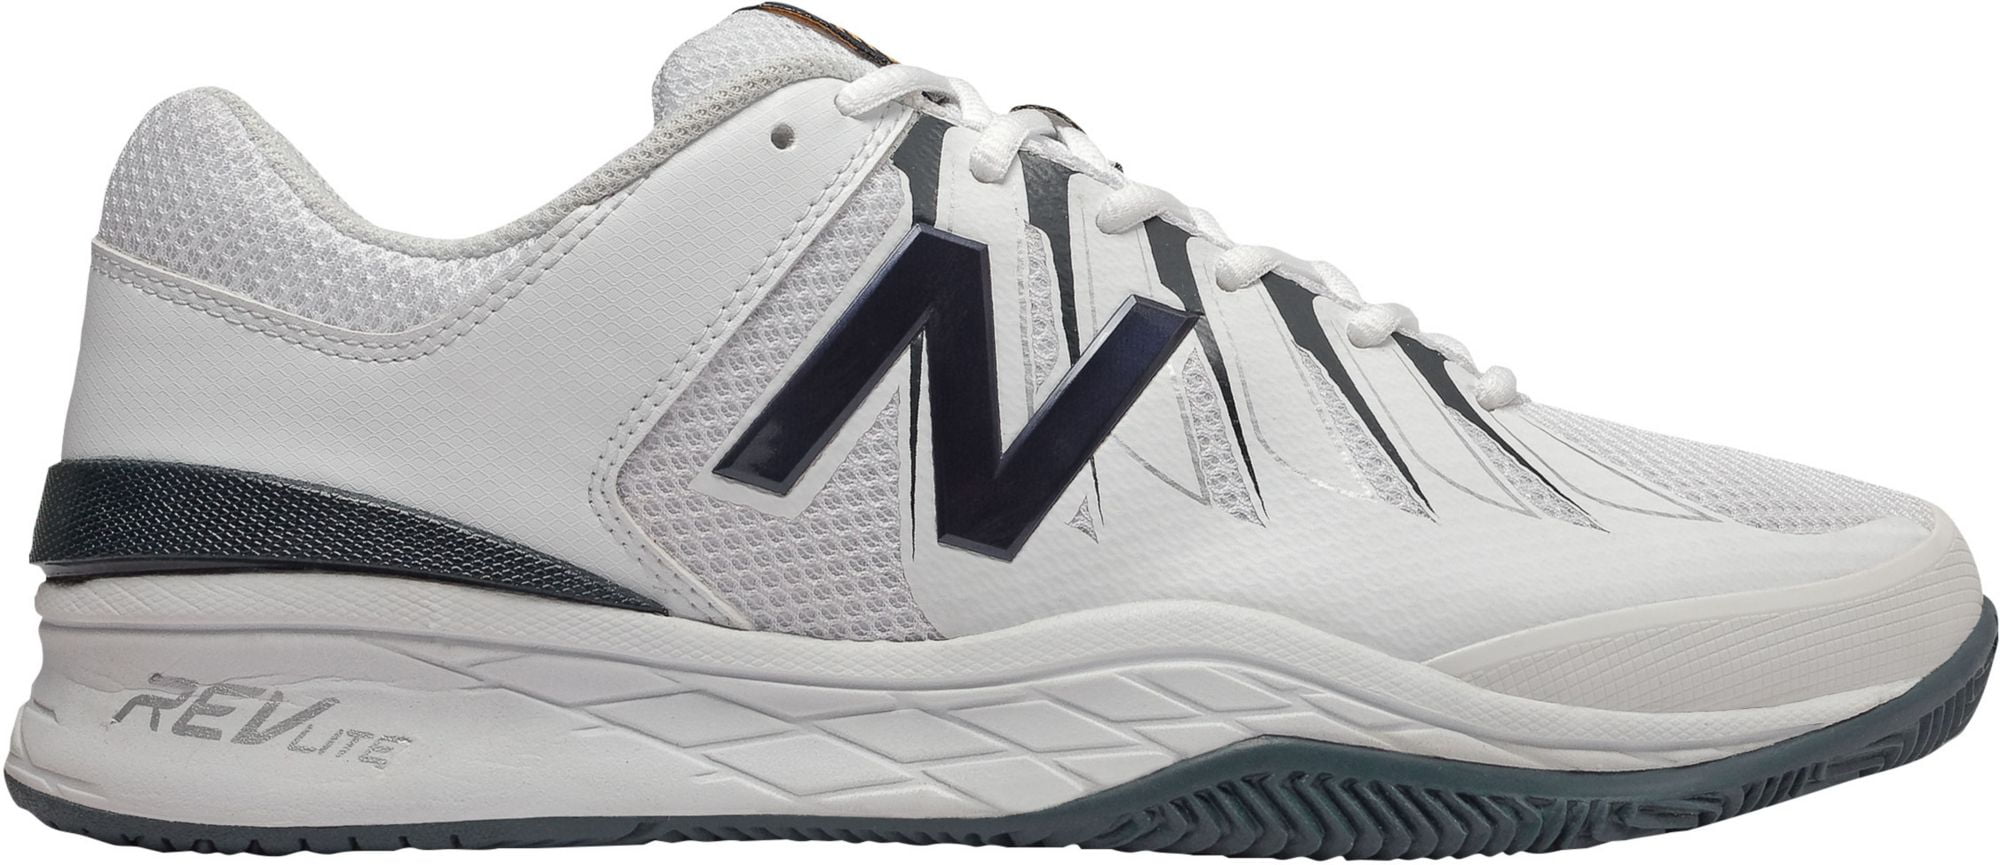 white tennis shoe 